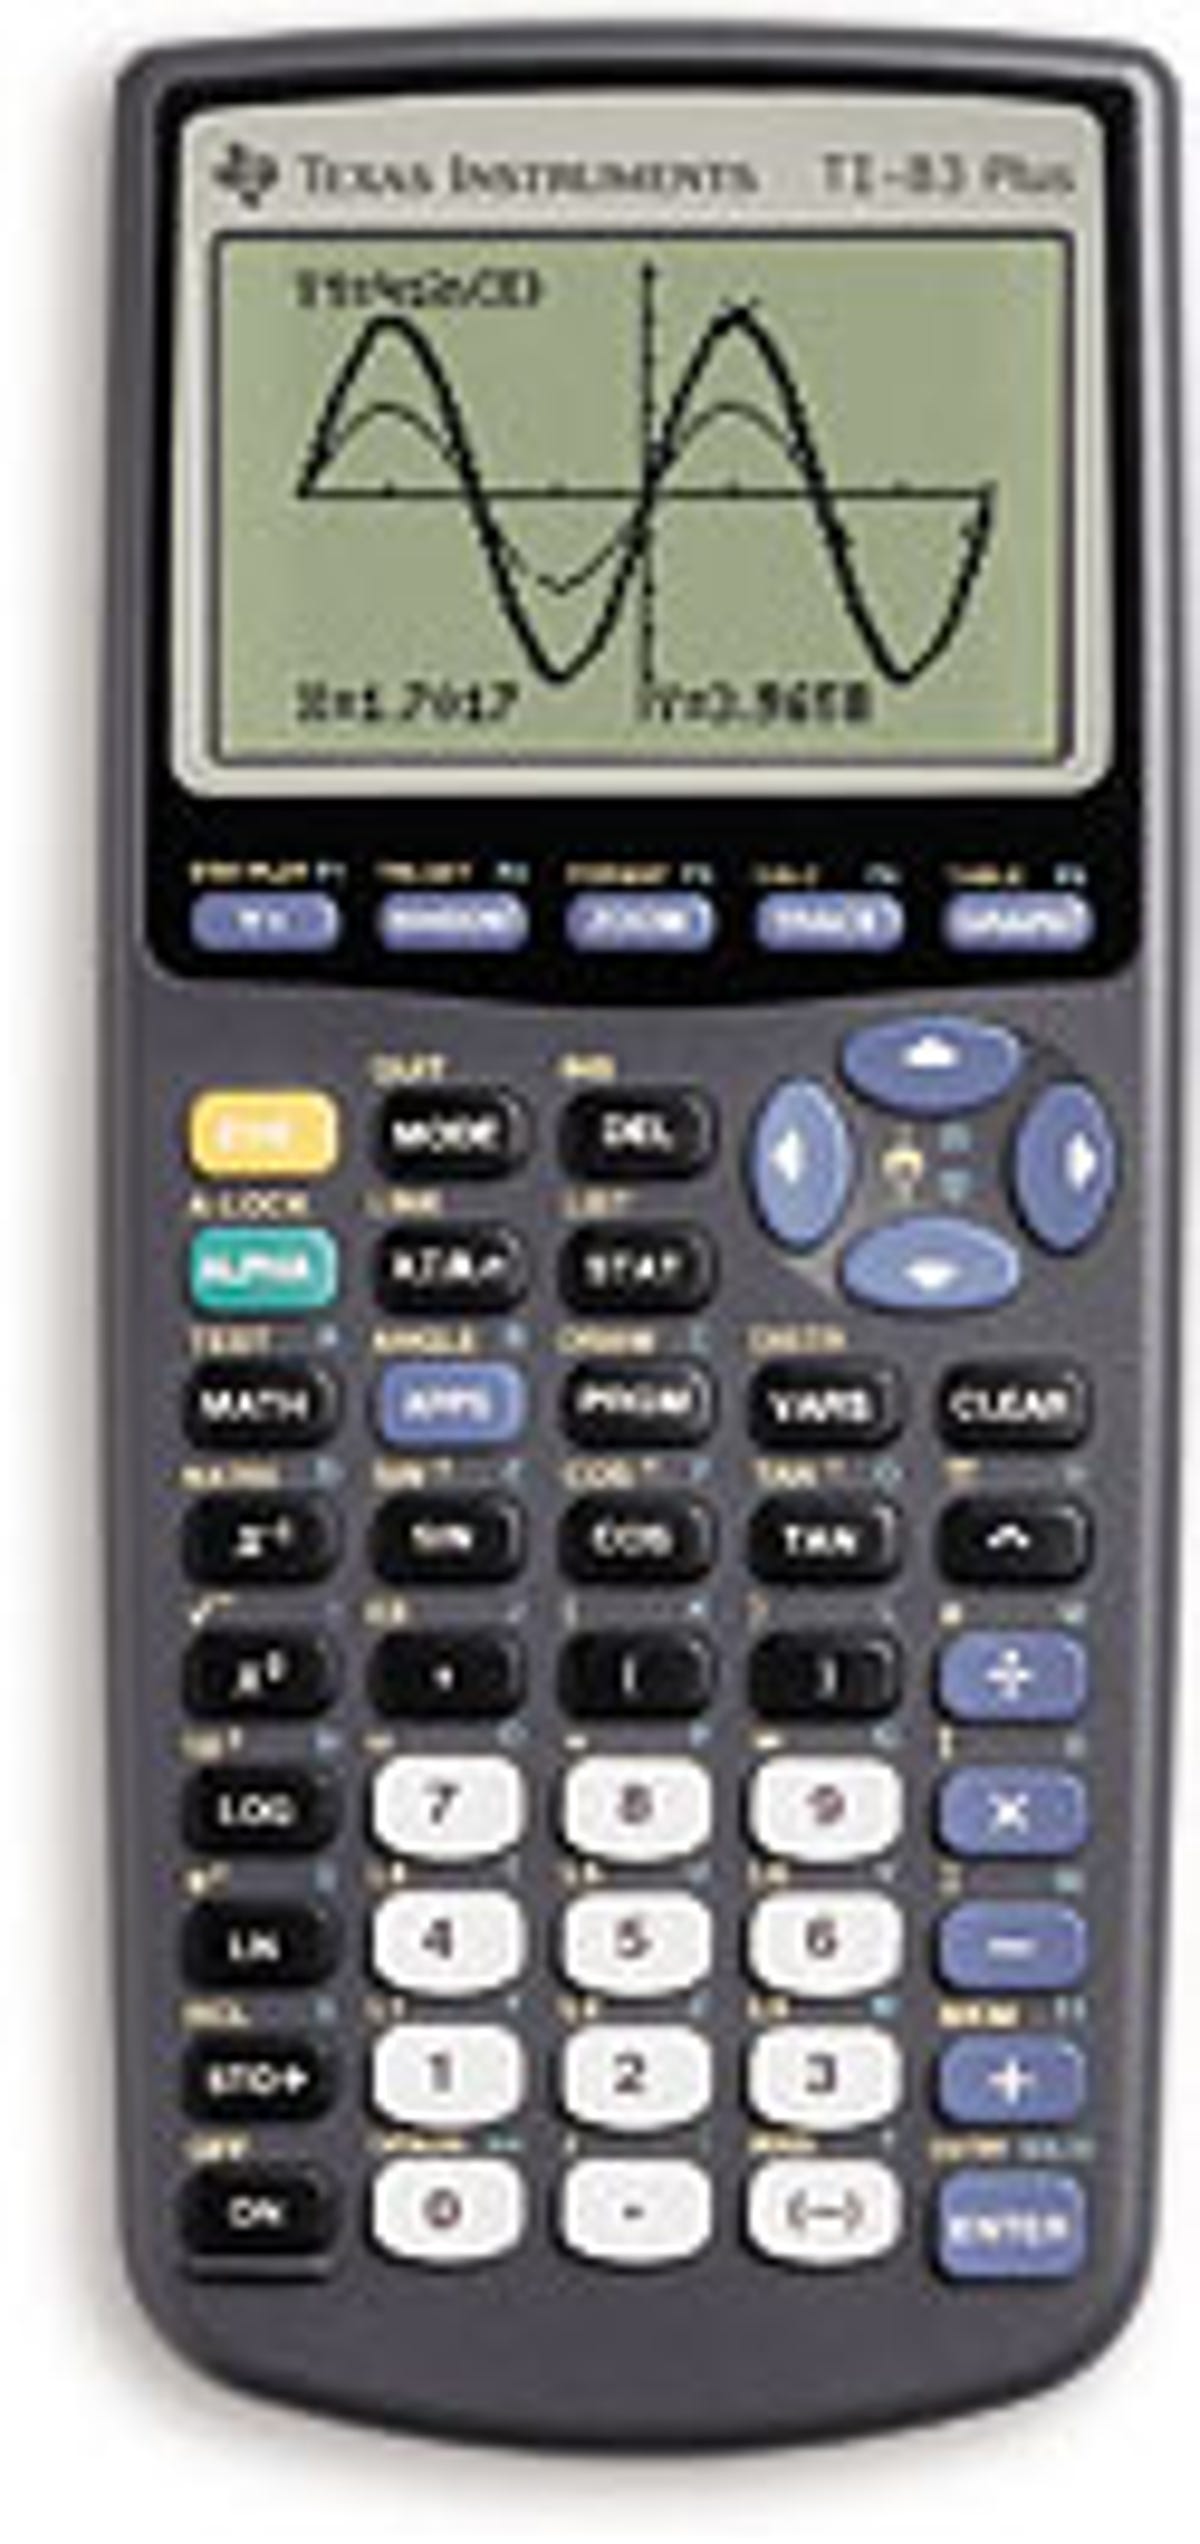 The TI-83 Plus calculator